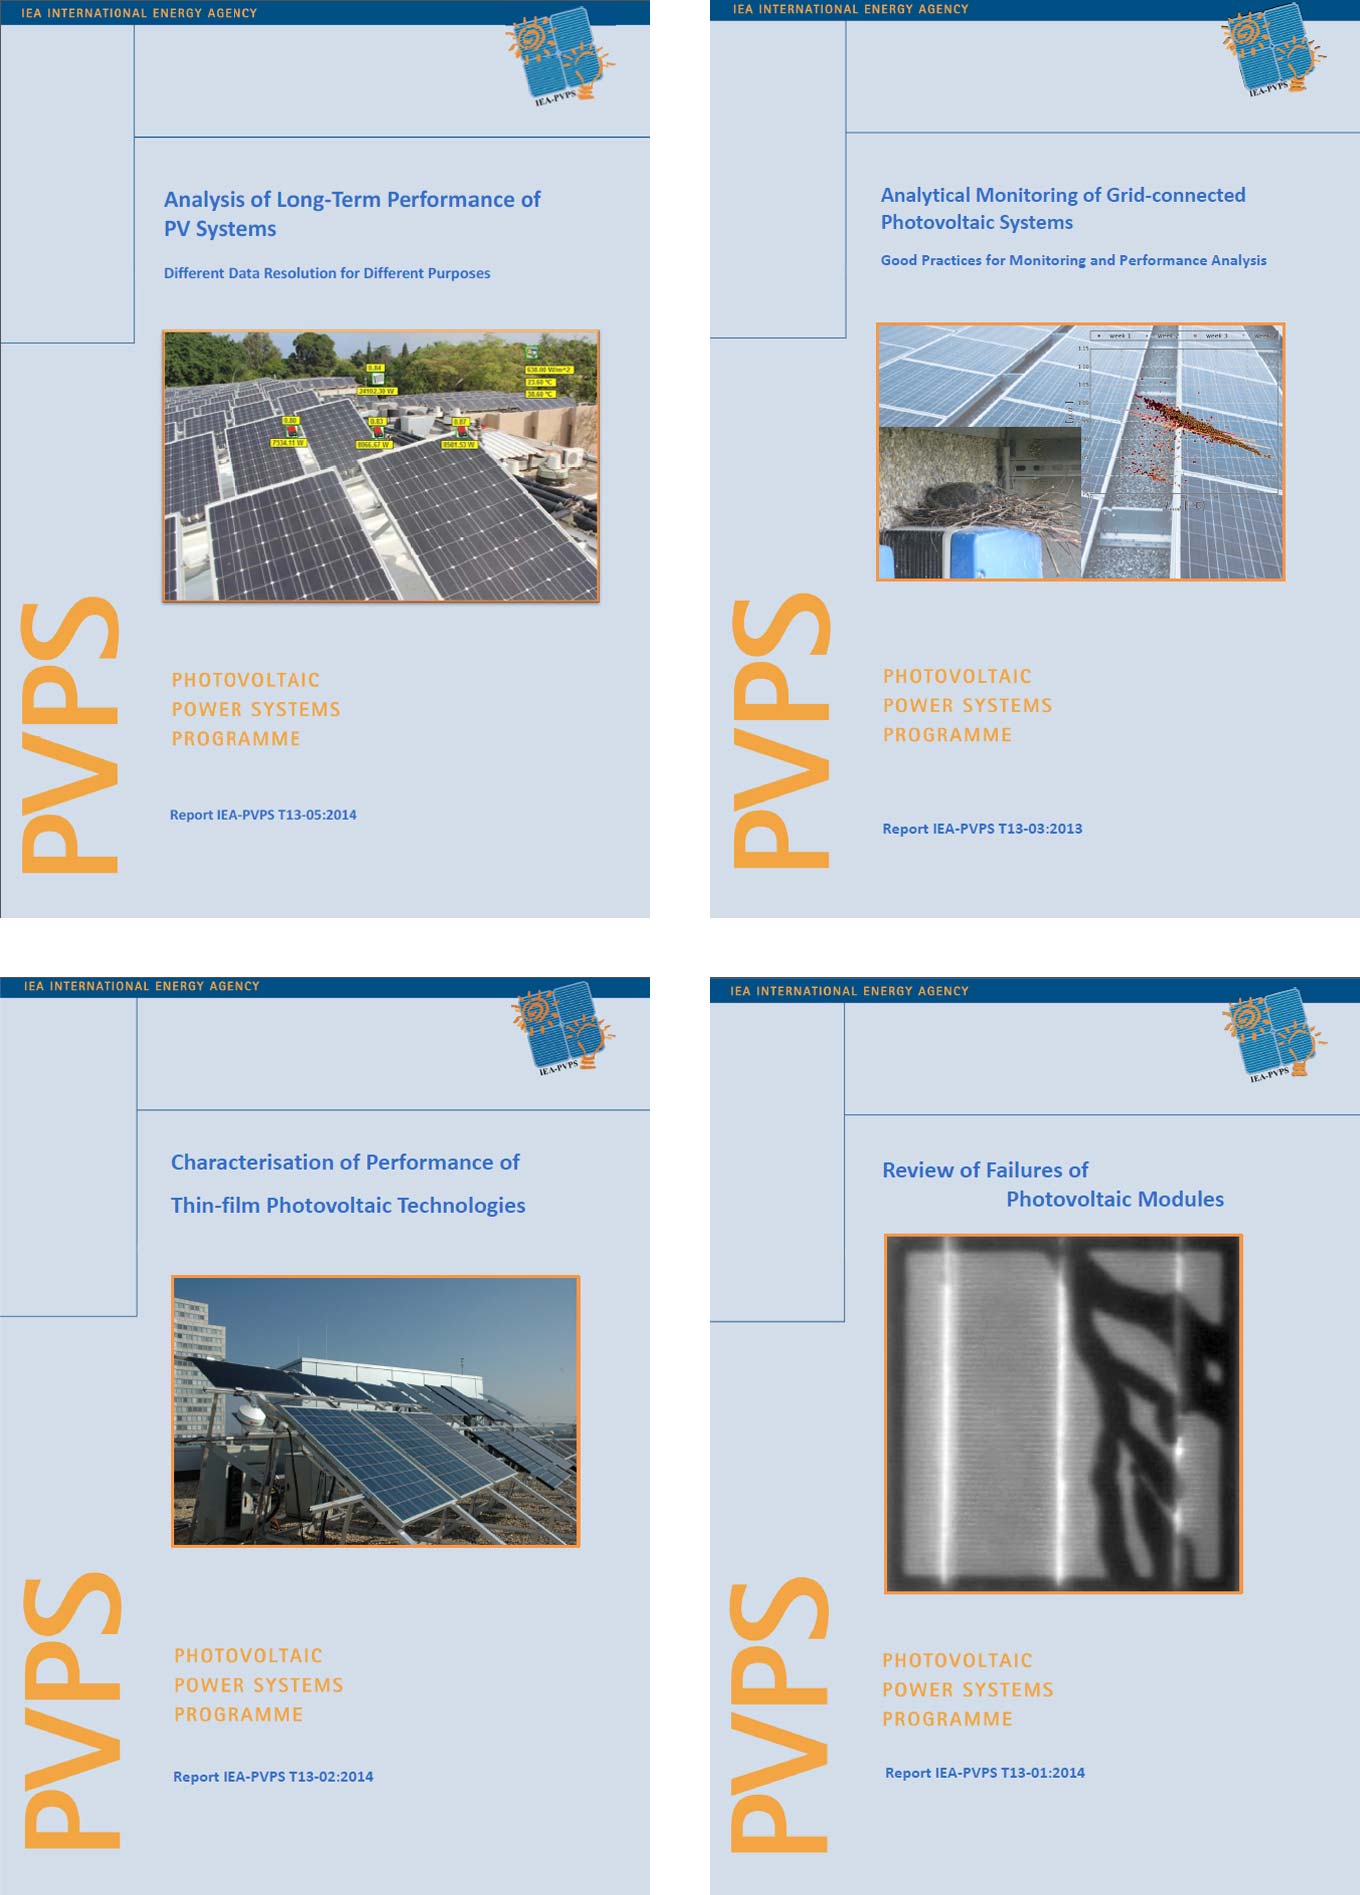 IEA Photovoltaic Power System Programme